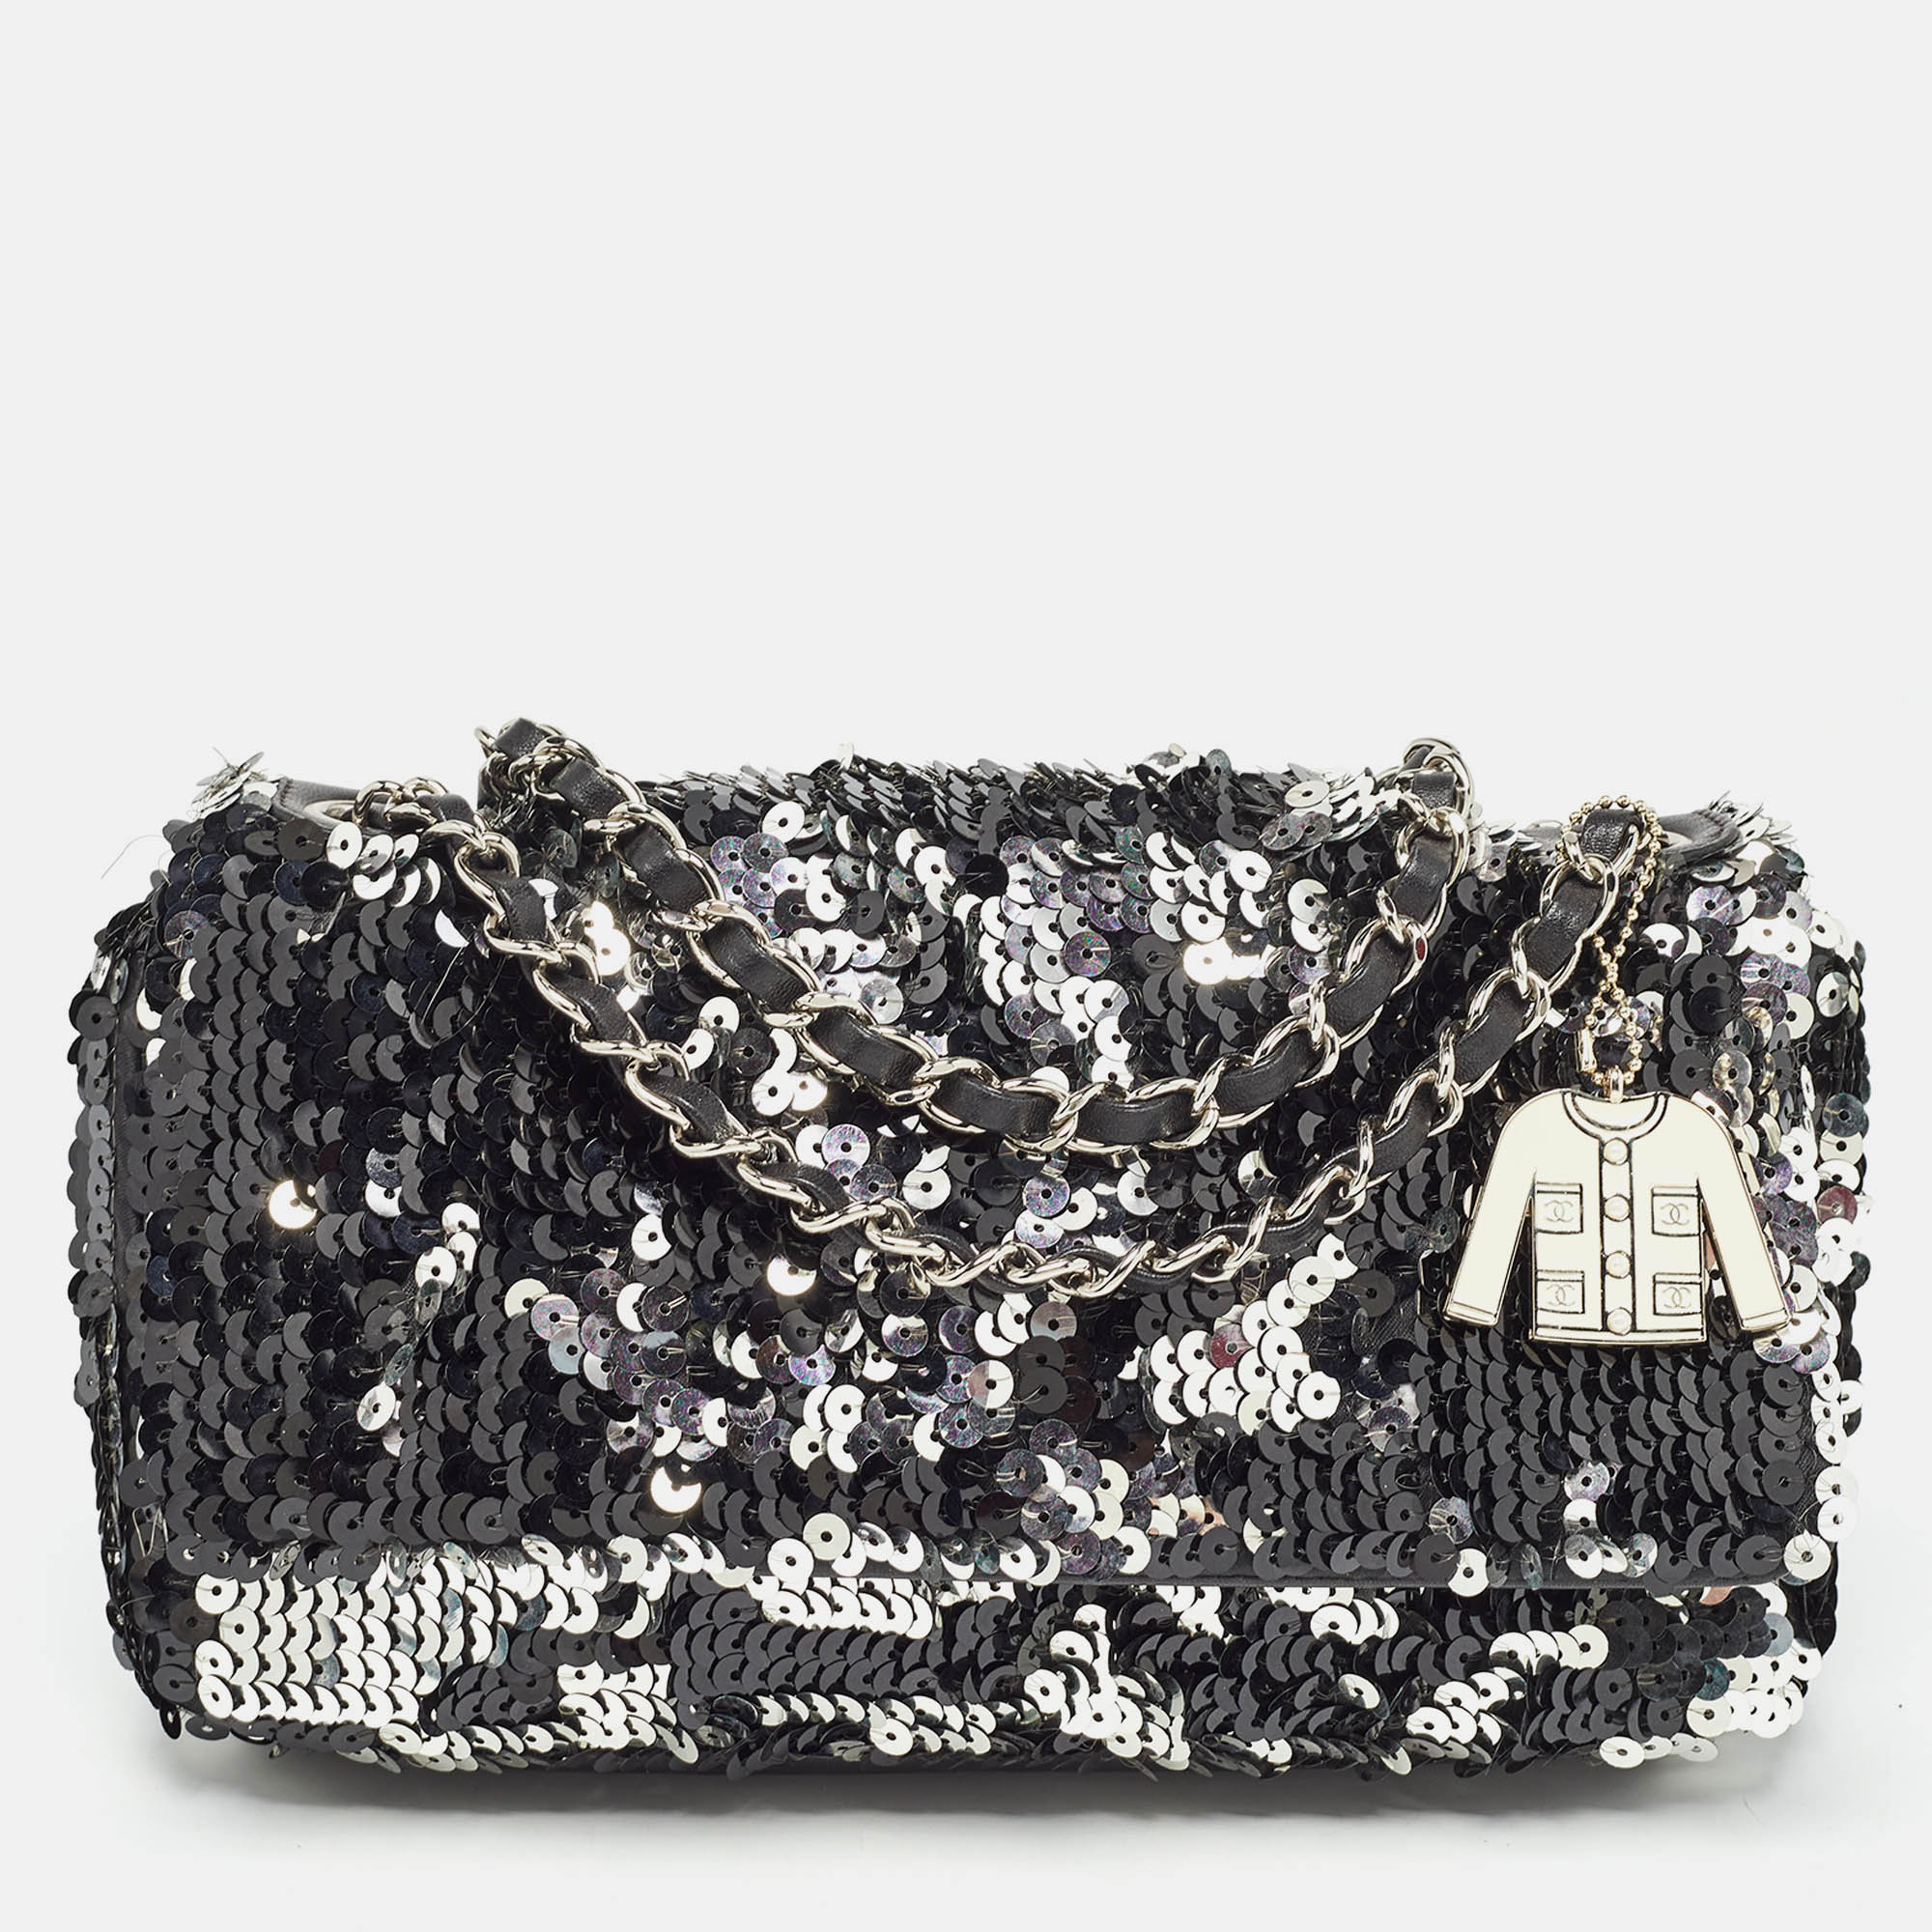 Chanel black/silver sequins flap bag